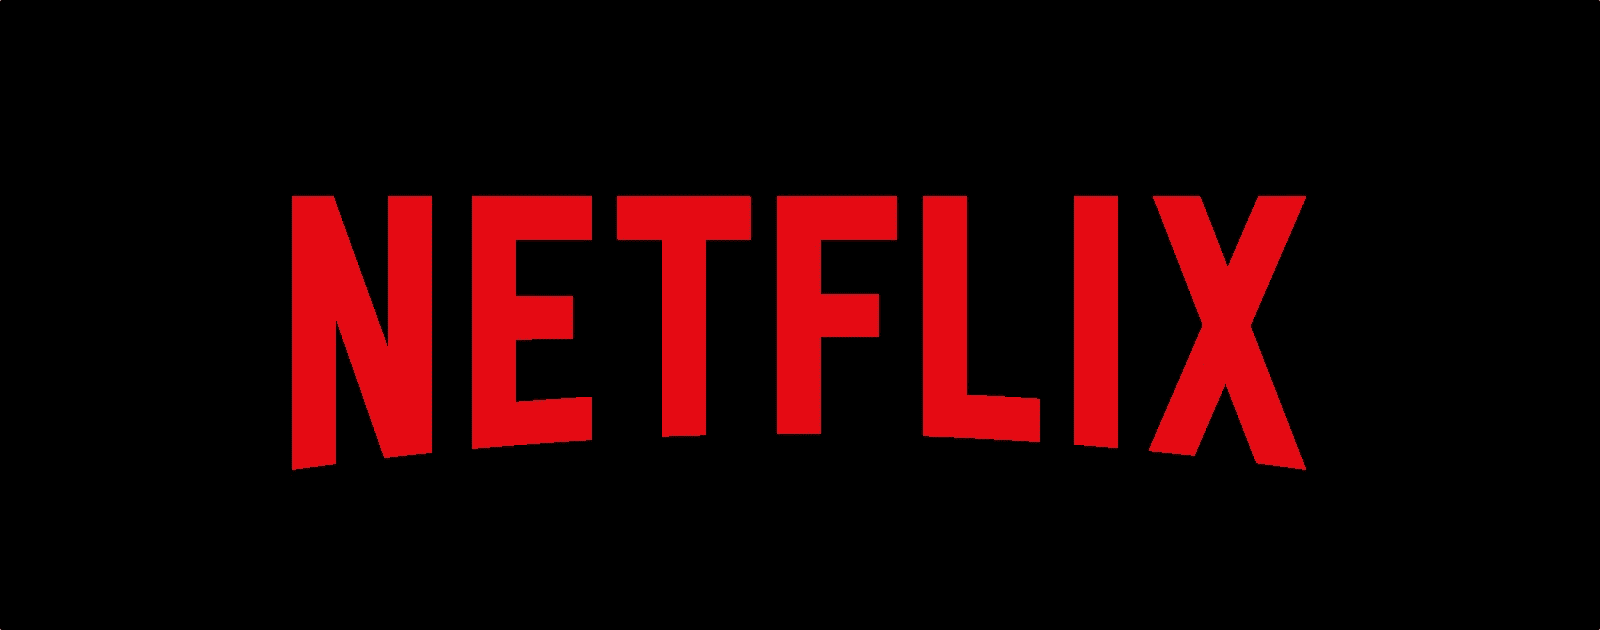 Netflix Added 8.8 Million Paid Subscribers Last Quarter